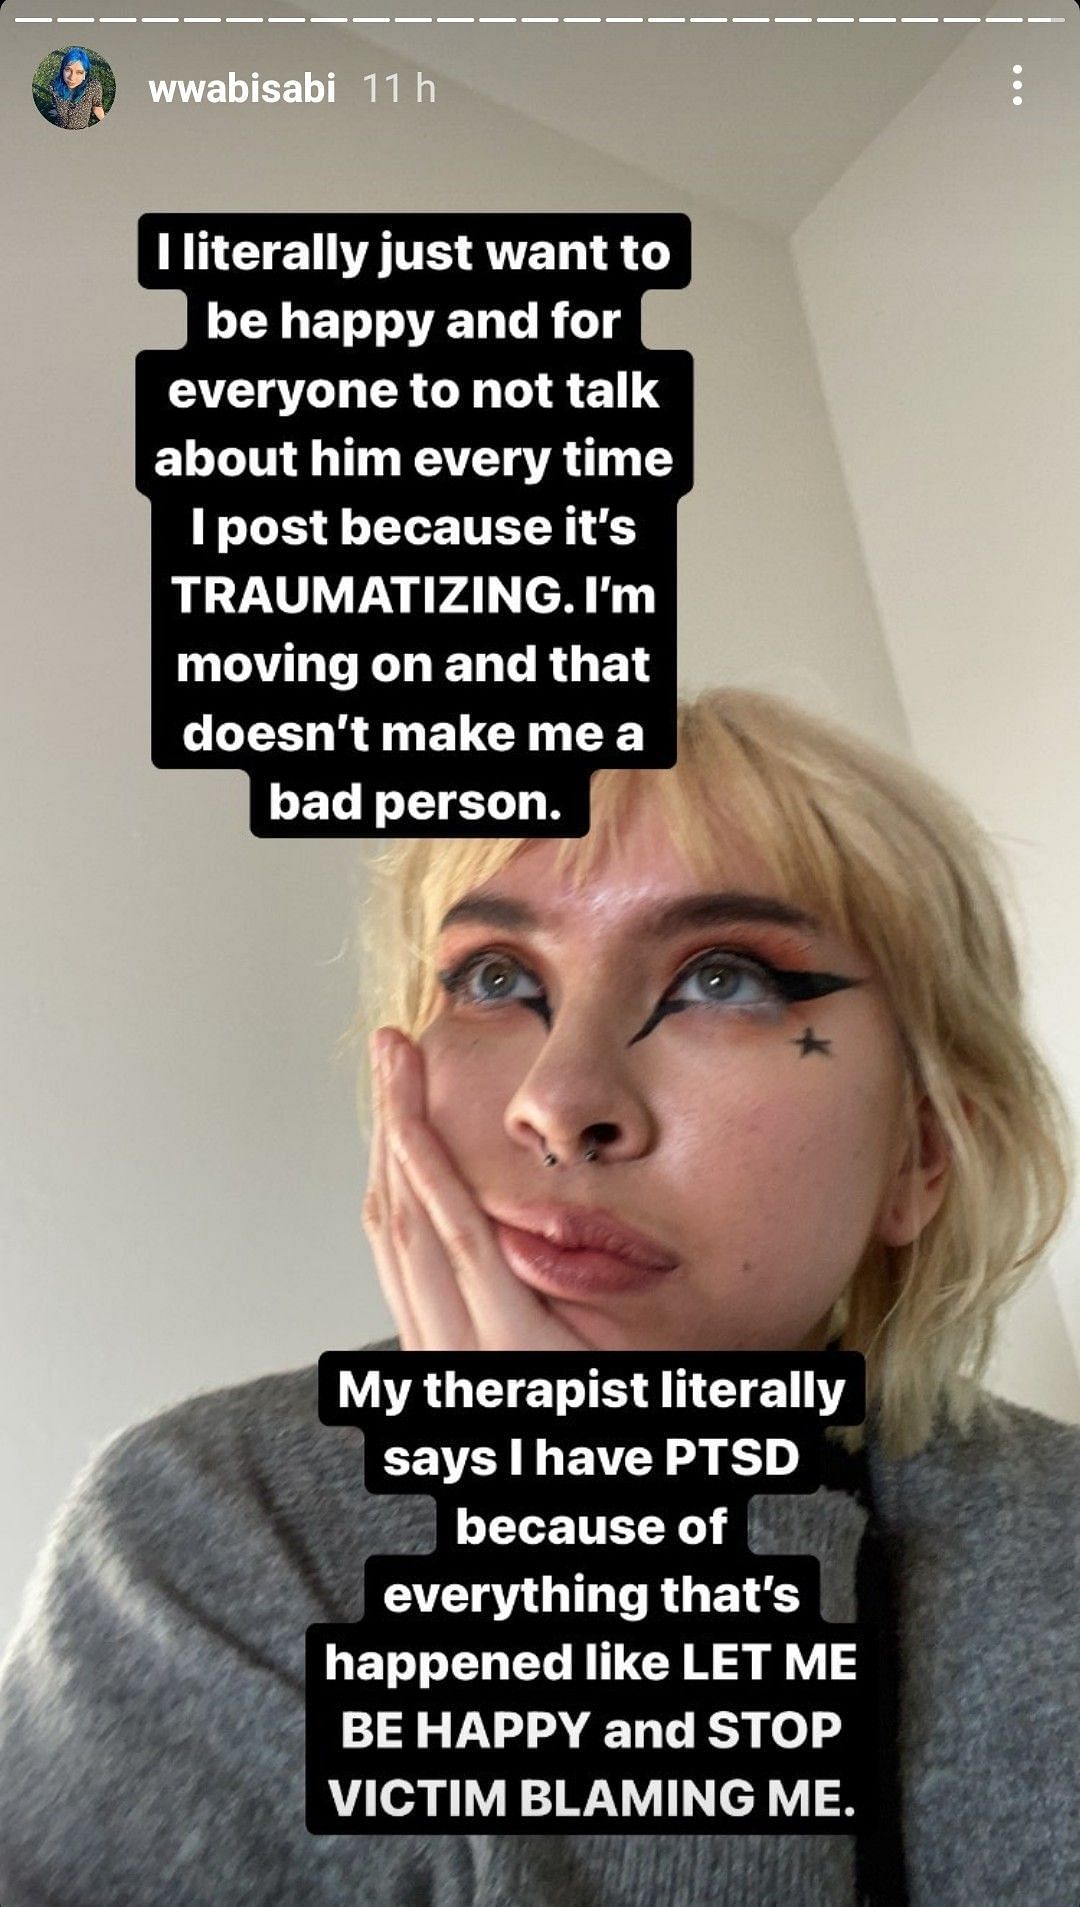 Nicole Land claims to have PTSD following her grooming (Image via wwabisabi/ Instagram)